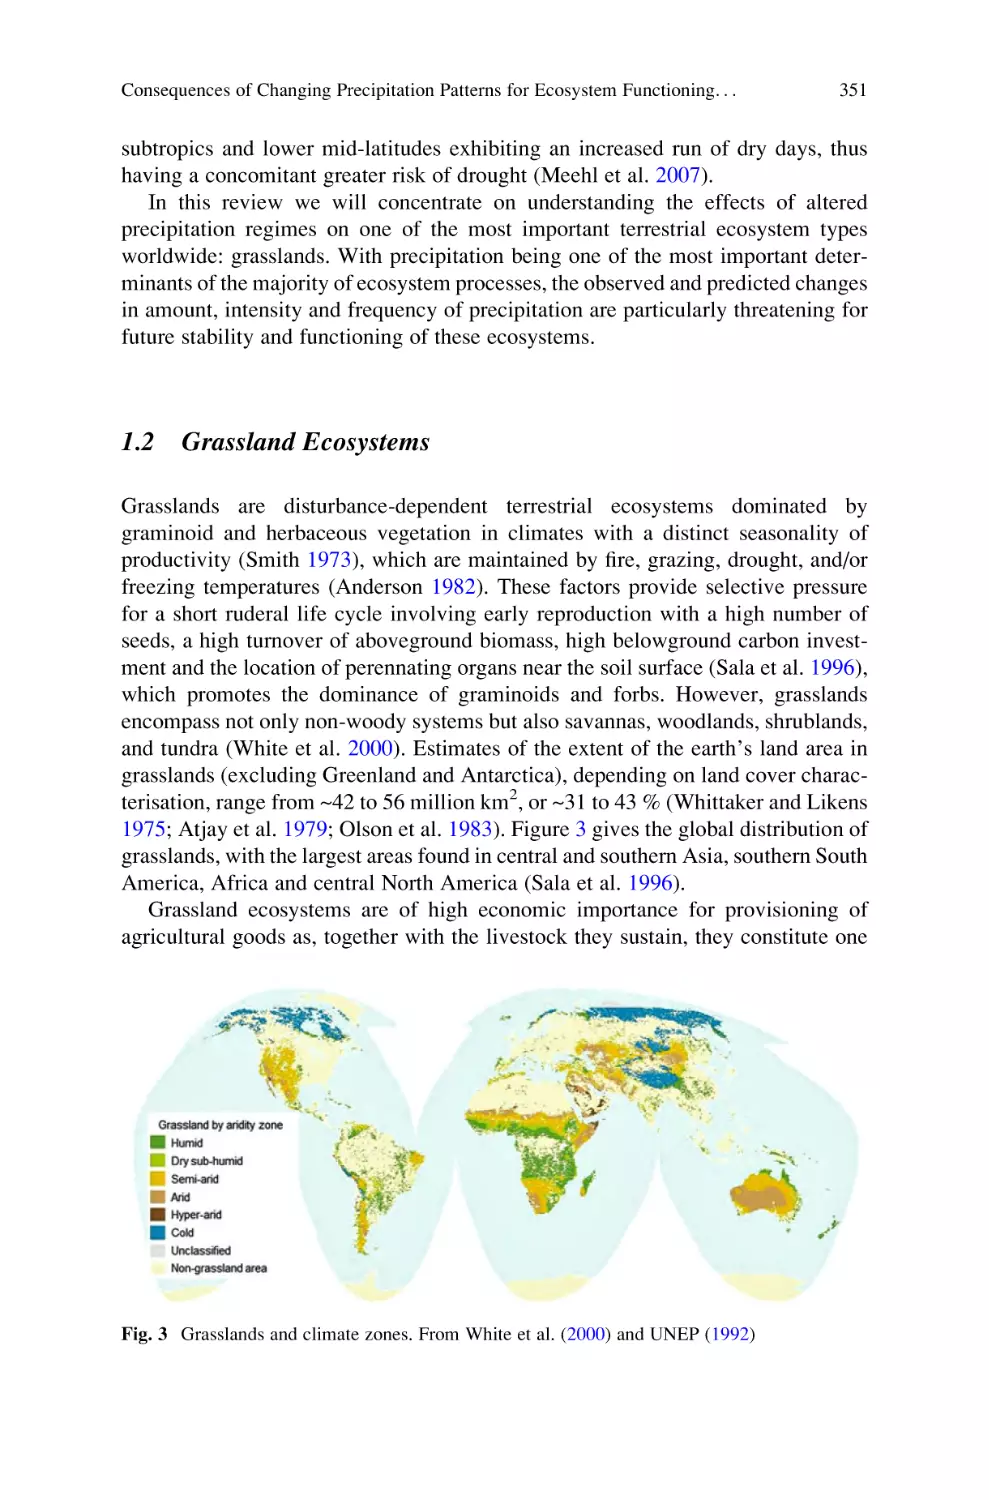 1.2 Grassland Ecosystems